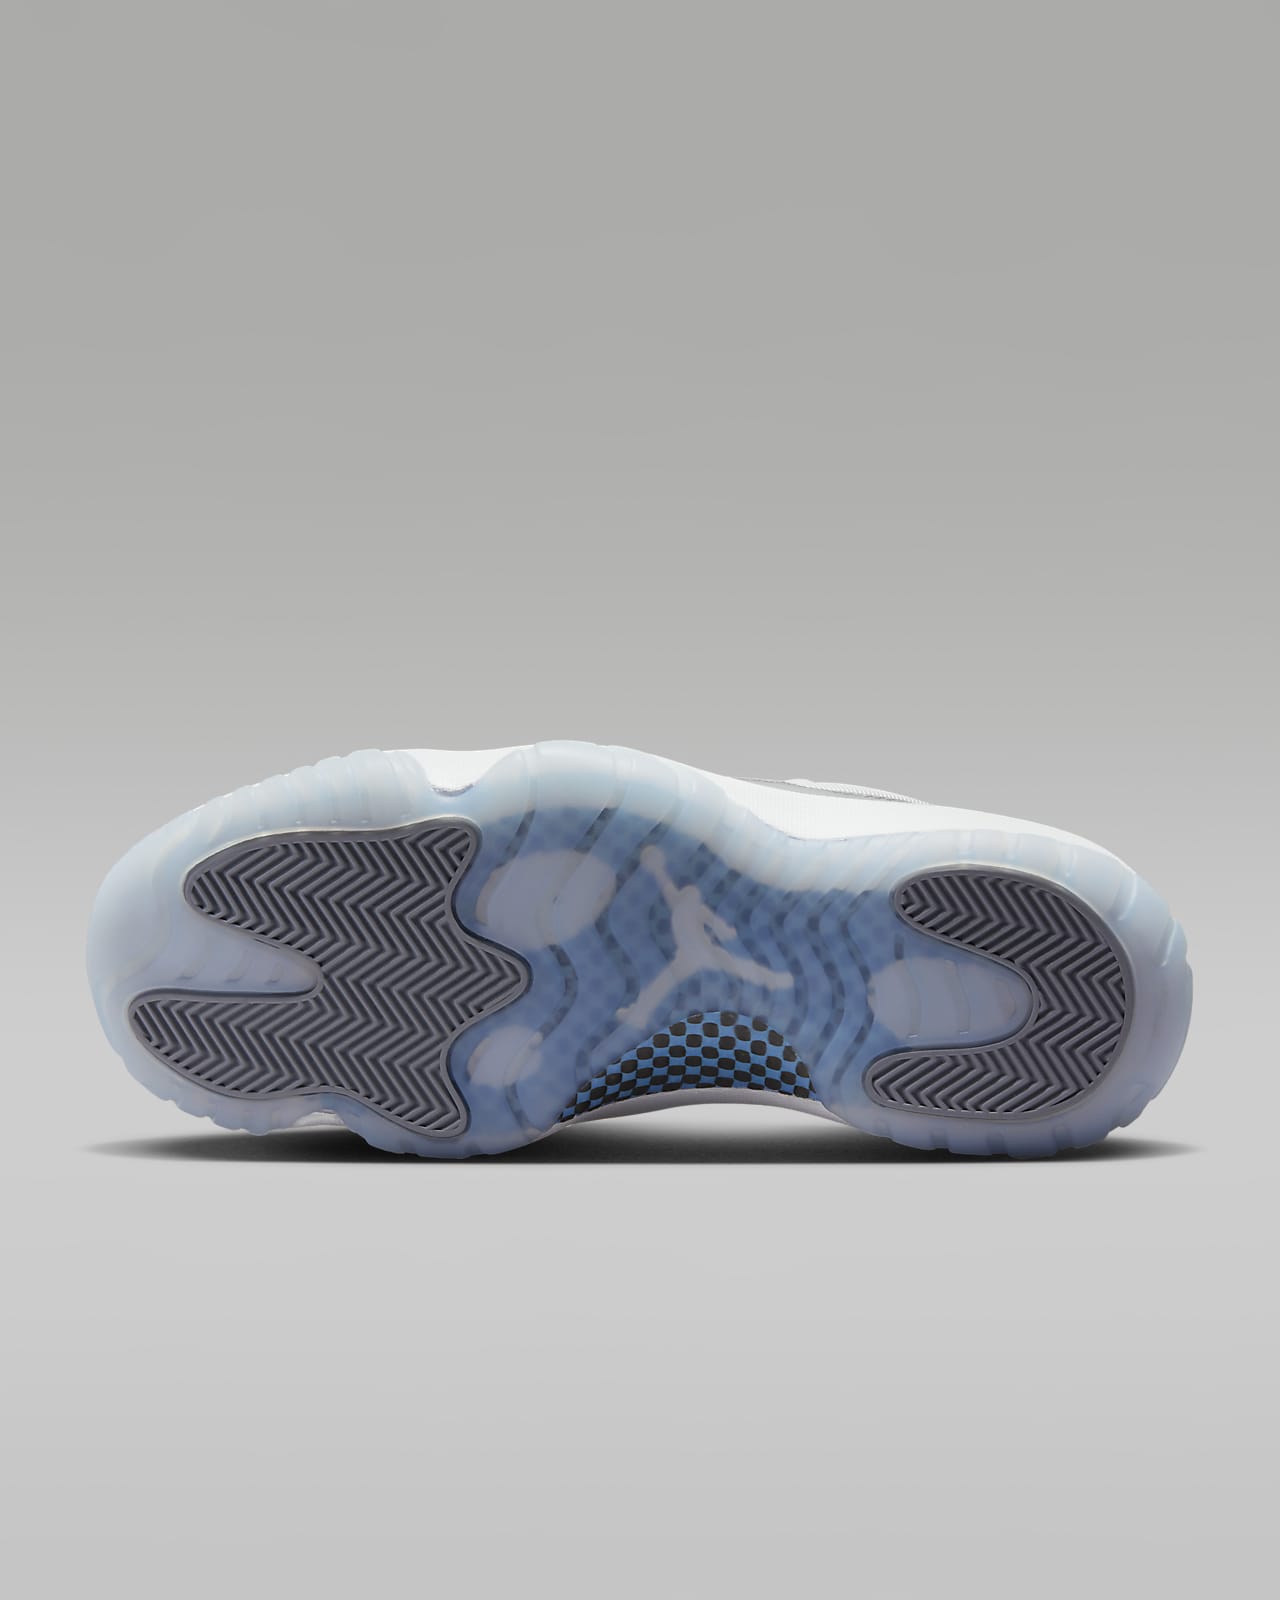 Air Jordan 11 Retro 'Legend Blue' Release Date. Nike SNKRS